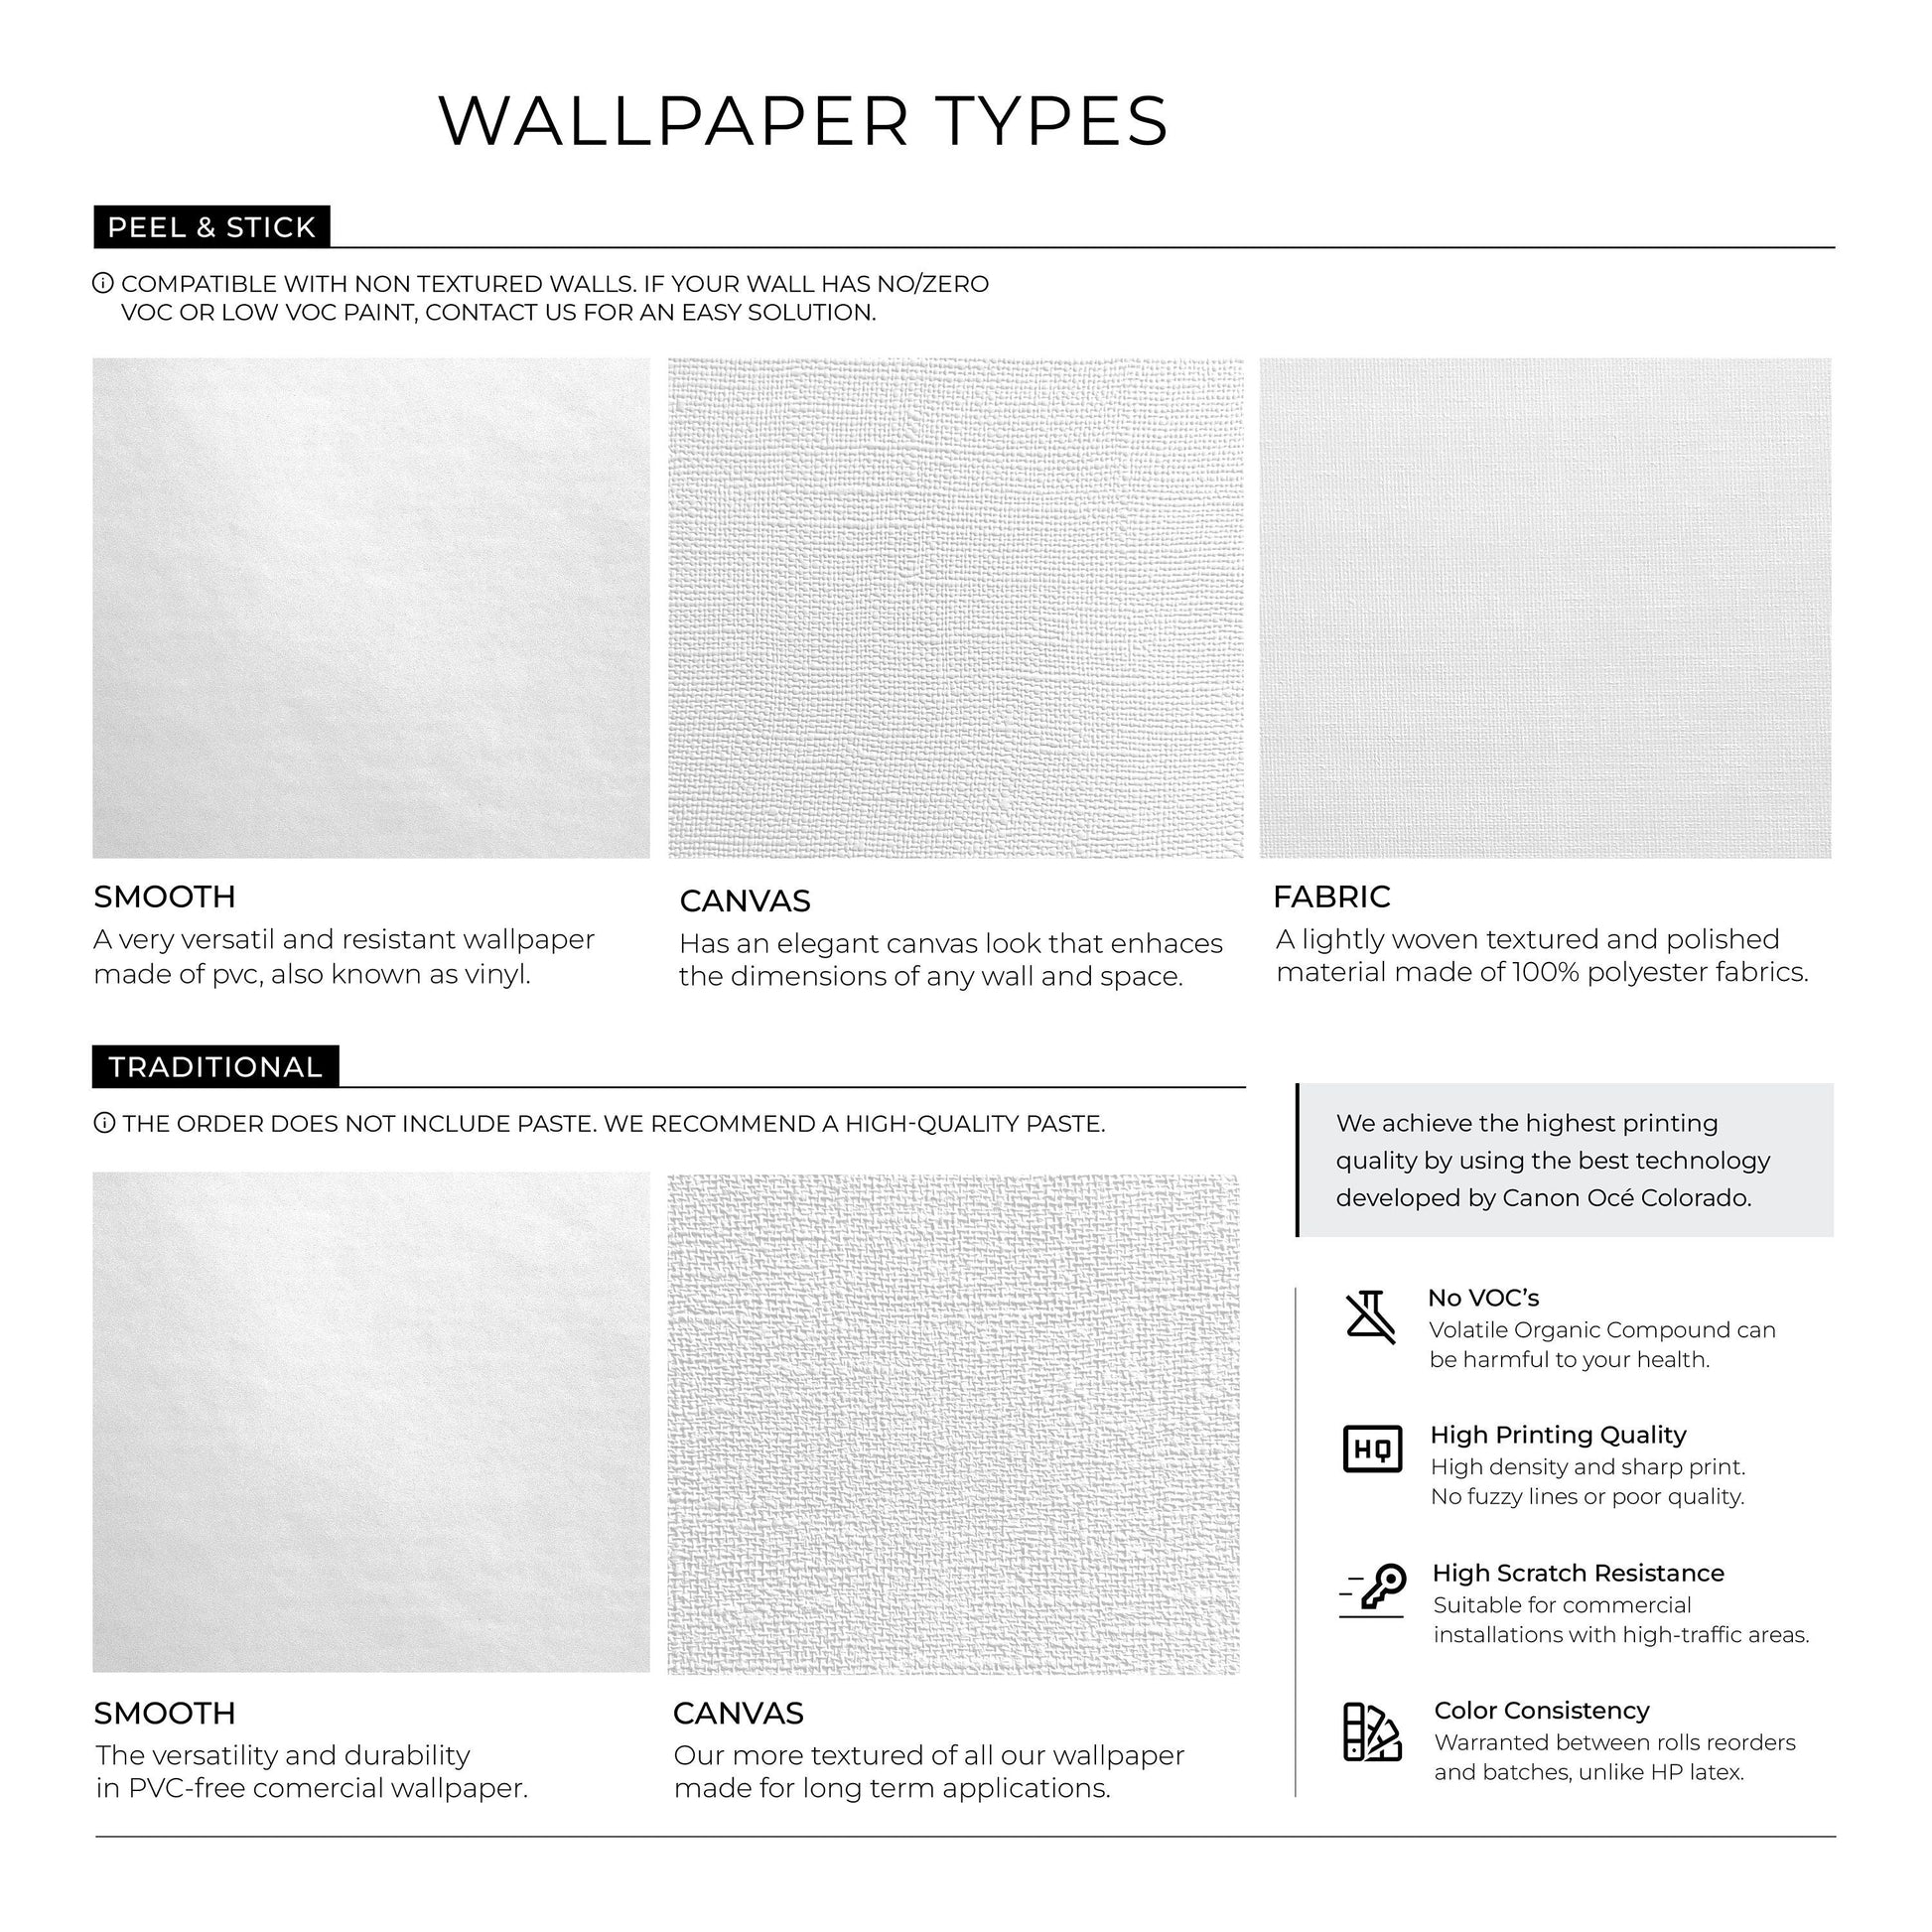 Taupe Grey Morrocan Tile Wallpaper / Peel and Stick Wallpaper Removable Wallpaper Home Decor Wall Art Wall Decor Room Decor - D164